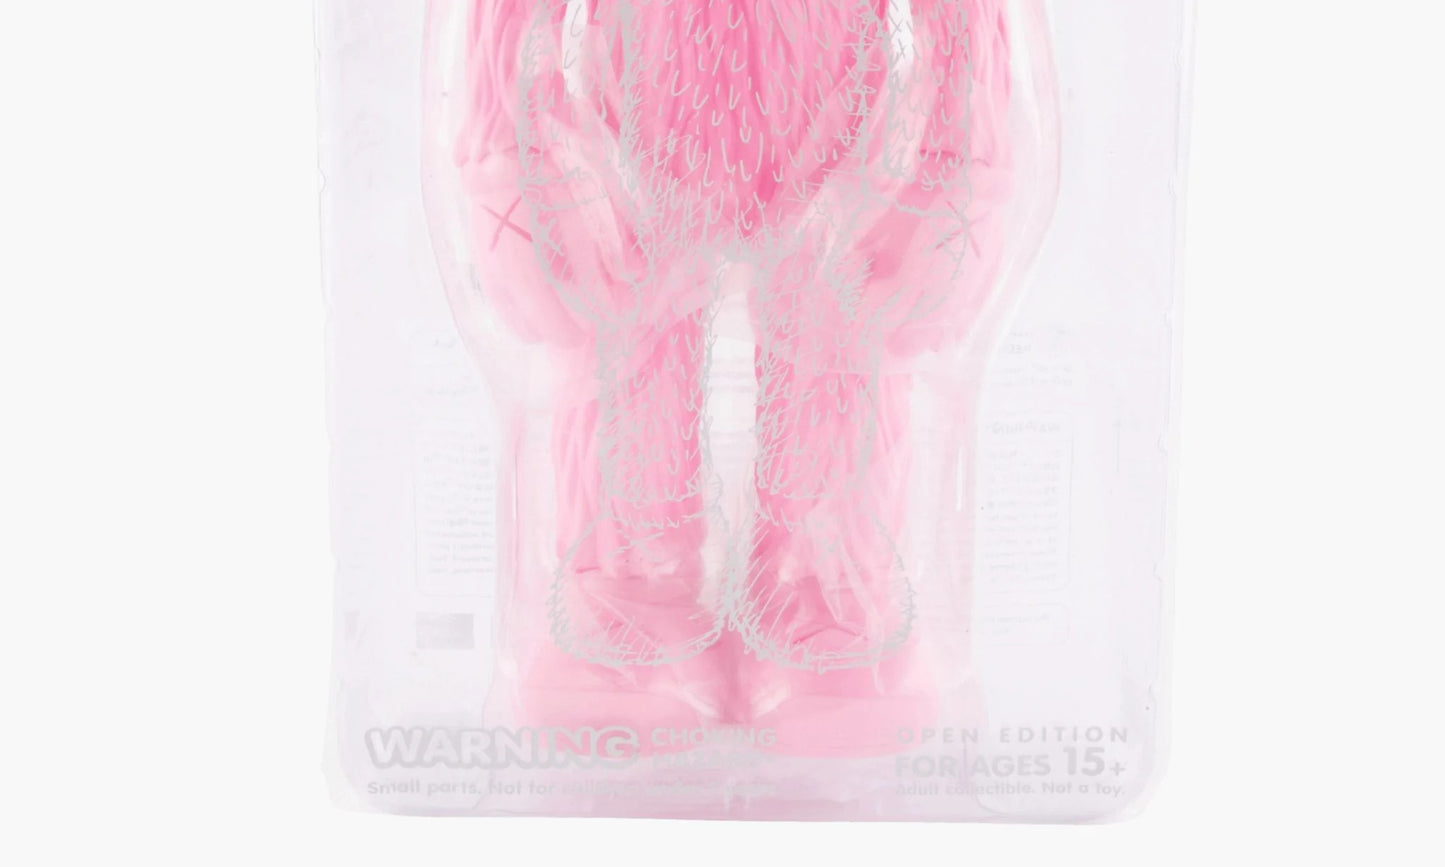 BFF Open Edition Vinyl Figure Pink - KAWS014 | The Sortage